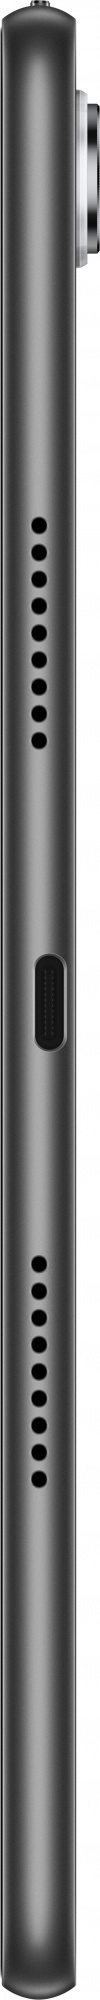 Huawei MatePad Air Wi-Fi 12/256GB, с клавиатурой